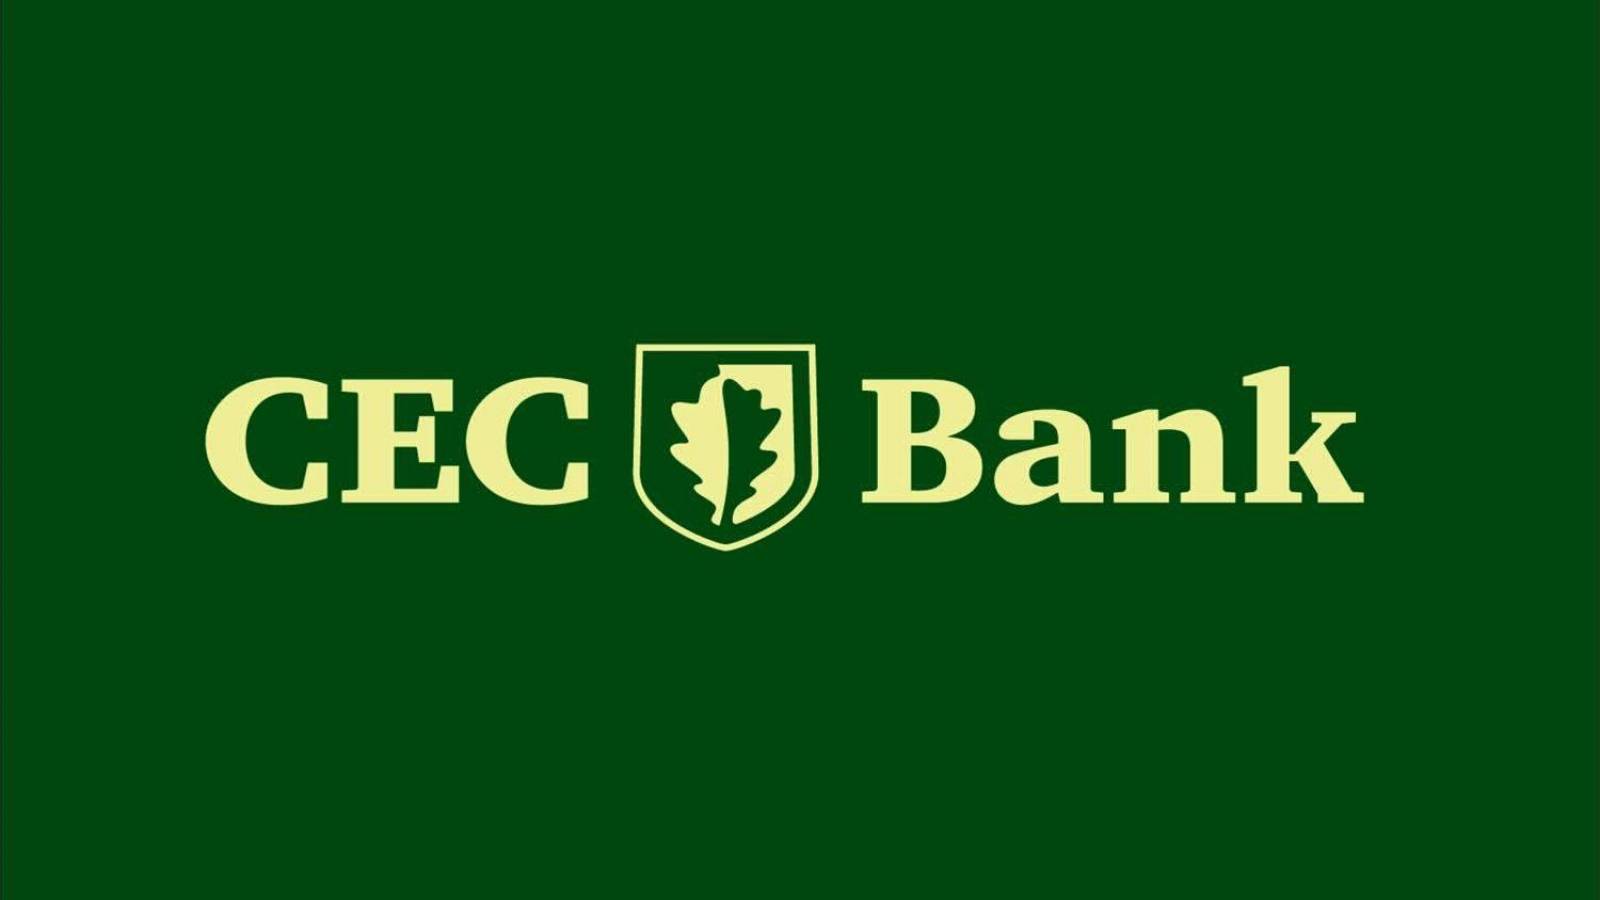 Pièces jointes de la banque CEC